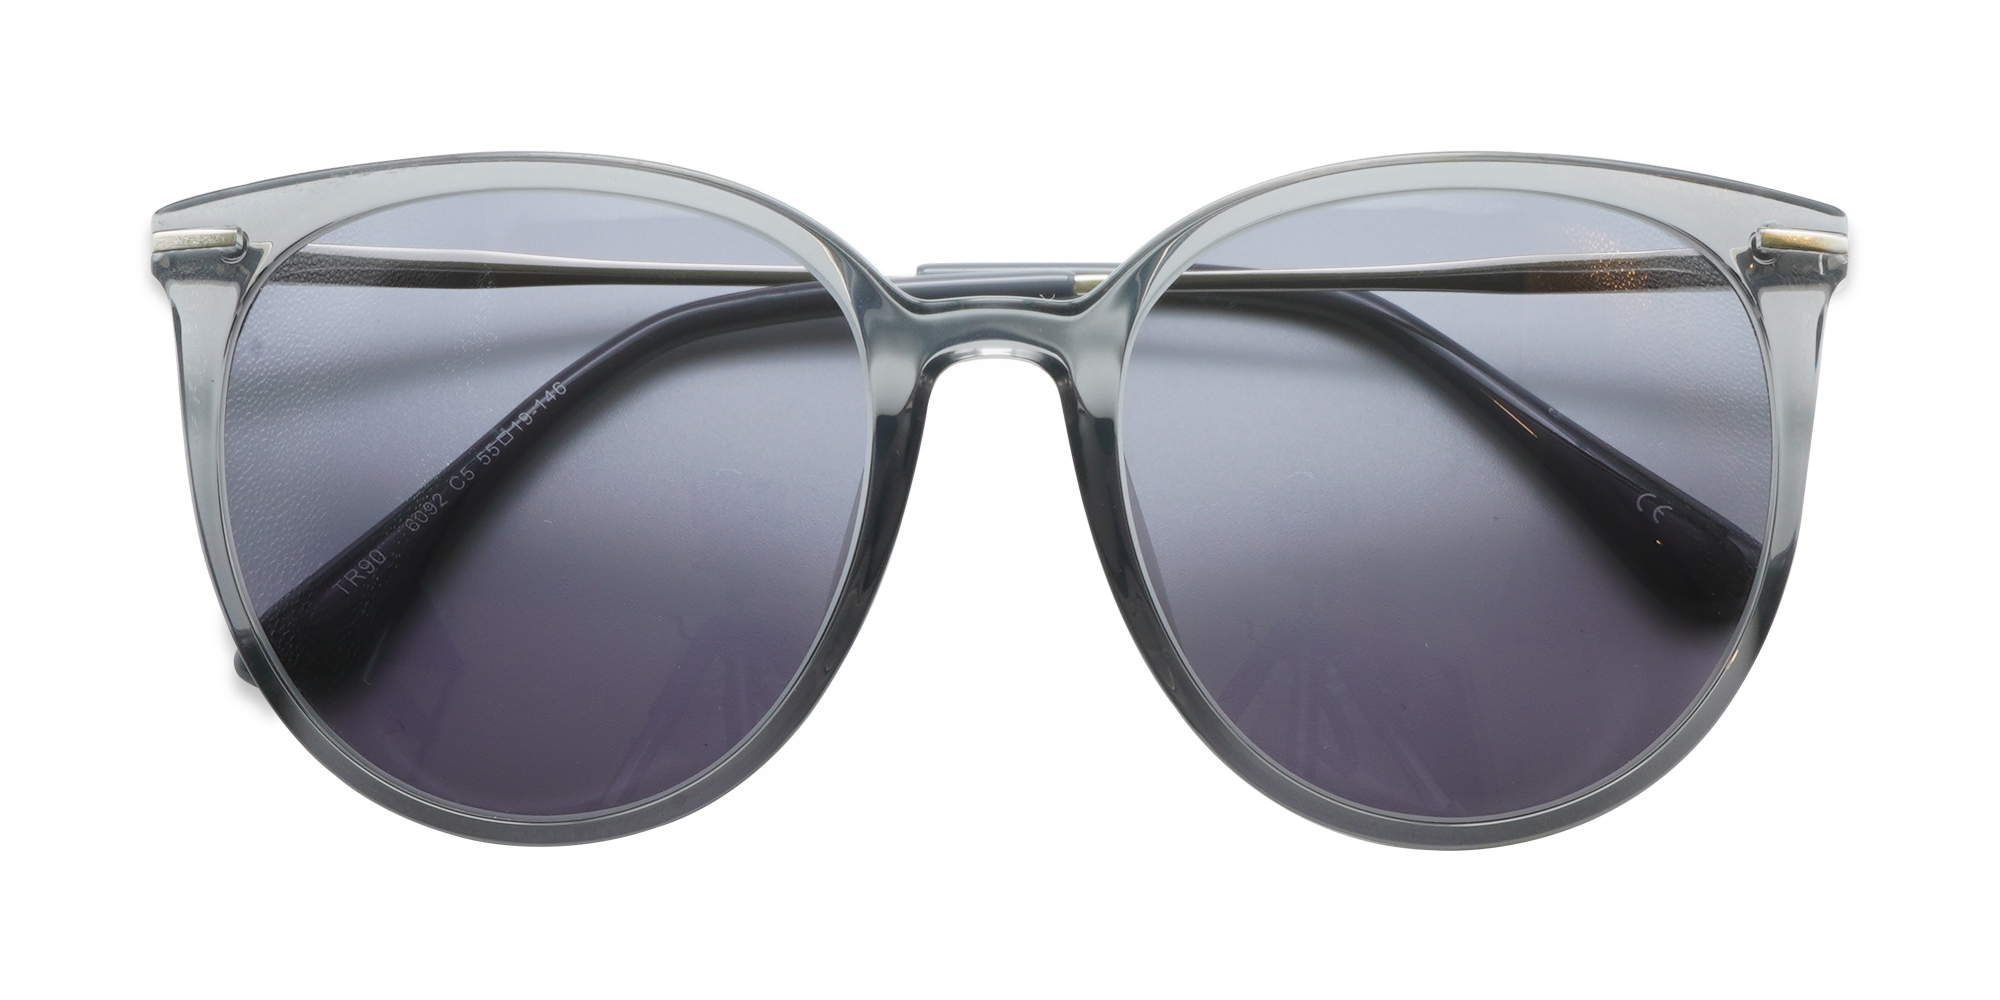 Elmira Rx Sunglasses - Women Prescription Round Sunglasses